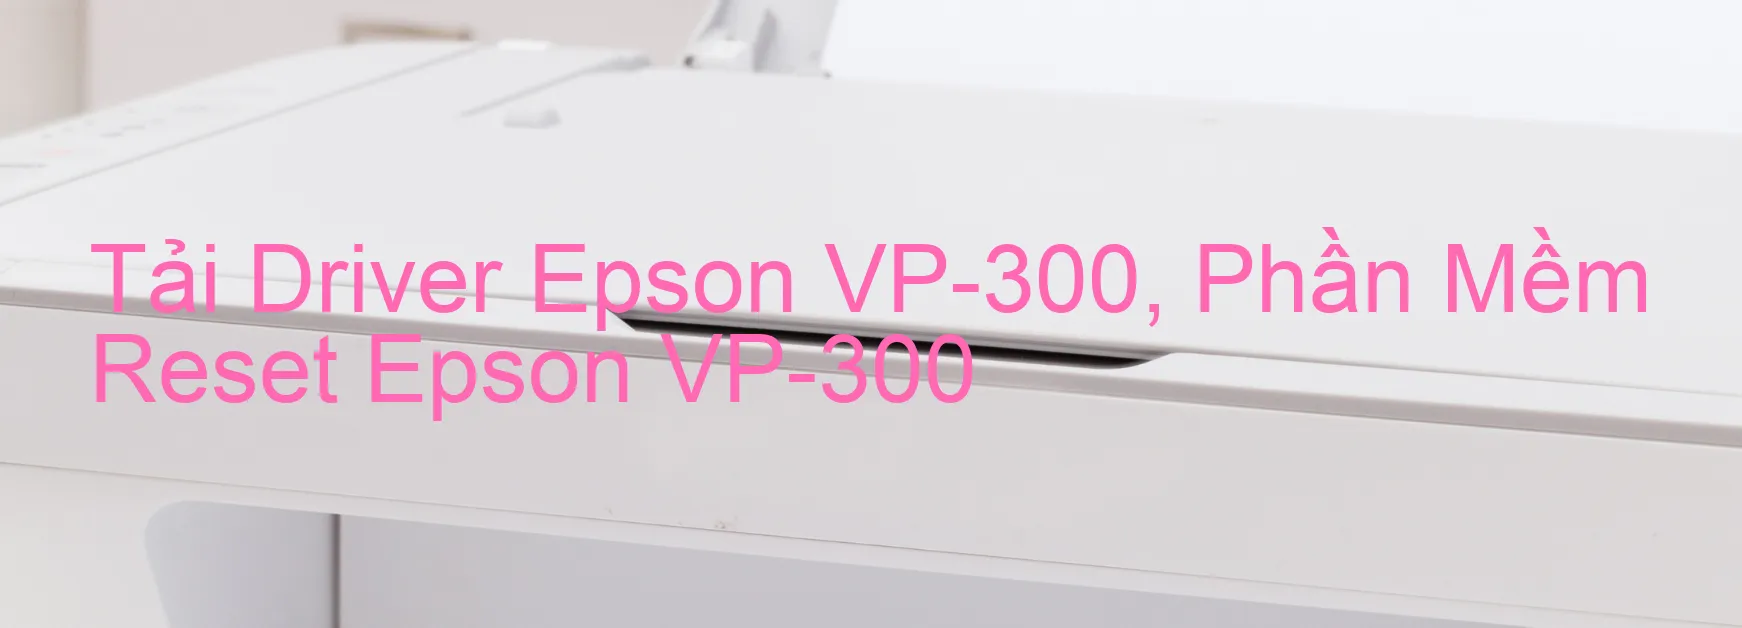 Driver Epson VP-300, Phần Mềm Reset Epson VP-300